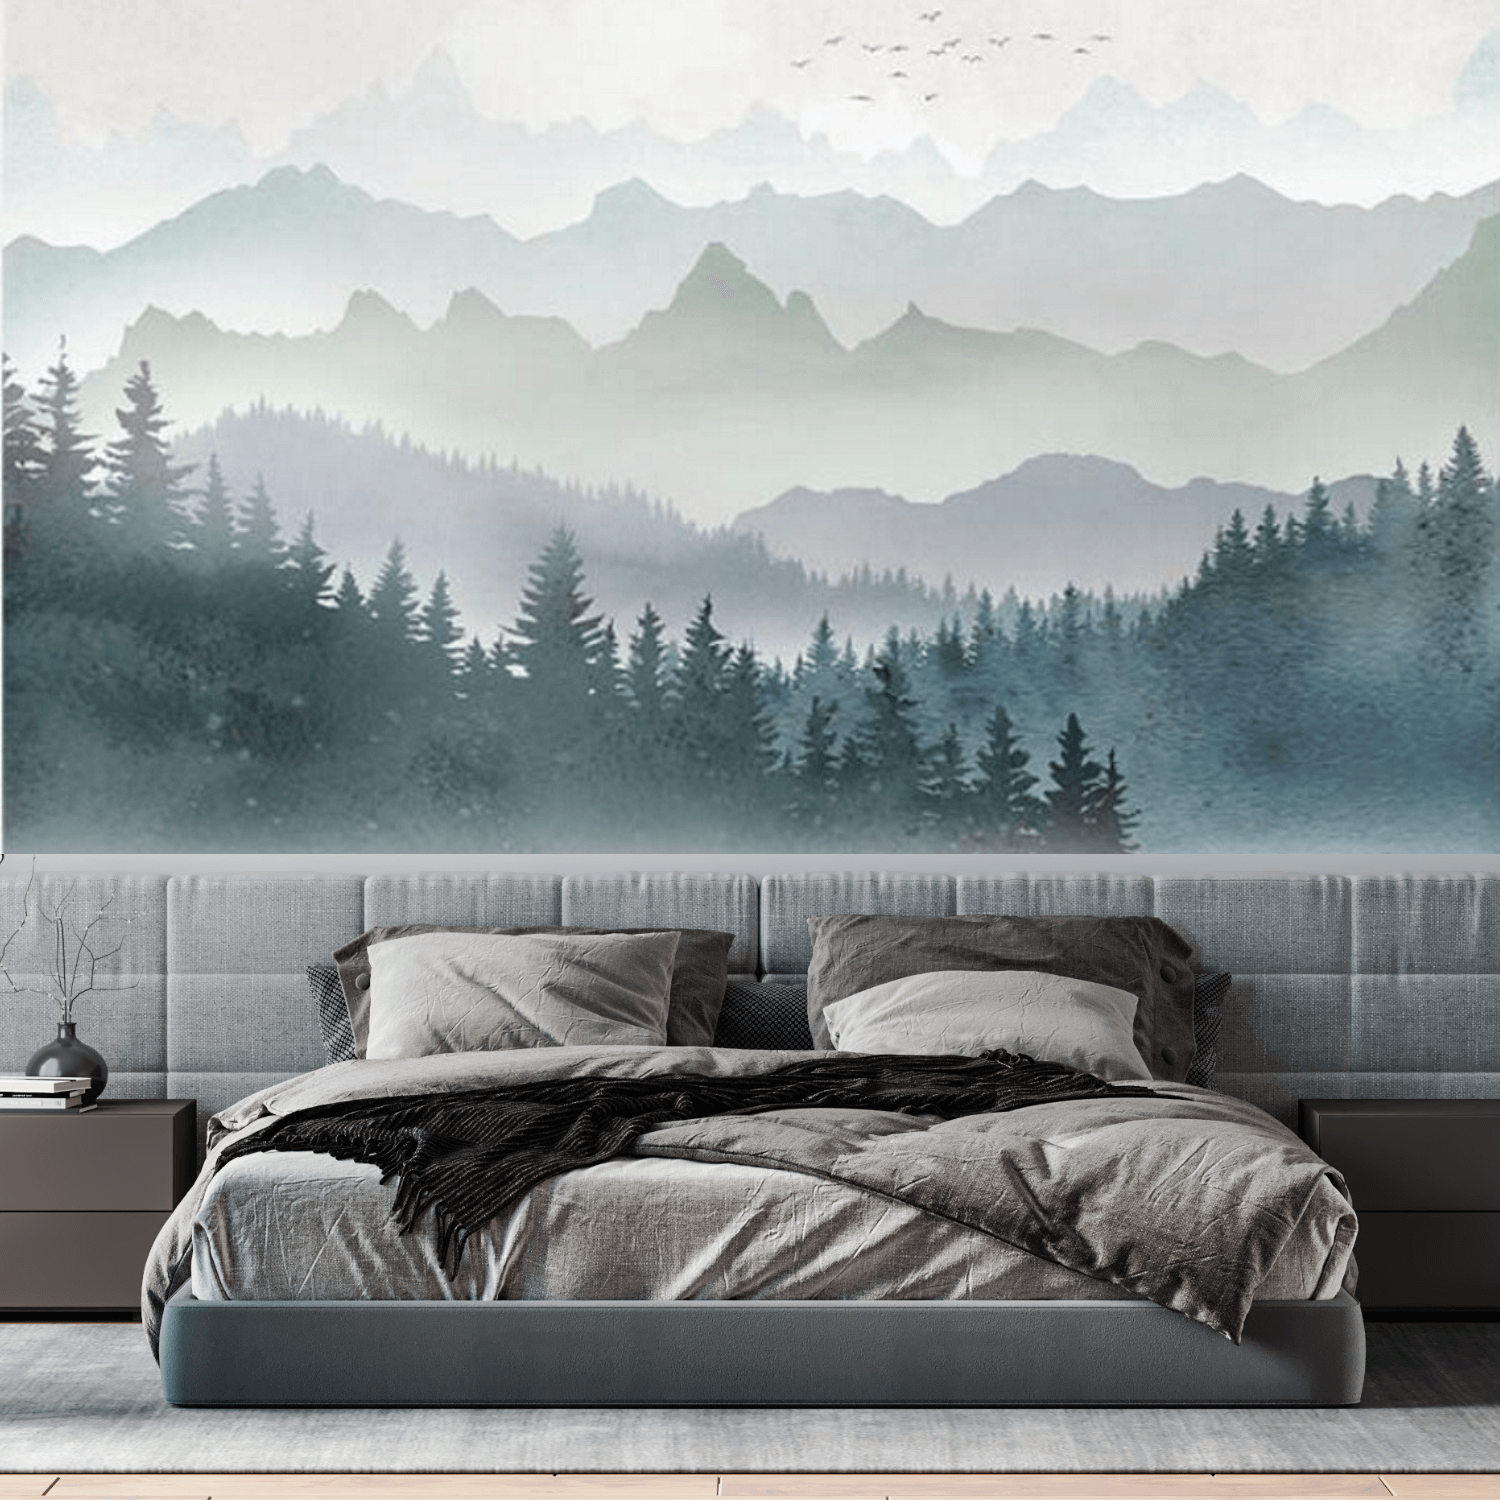 Misty Mountain Forest Landscape Wall Mural